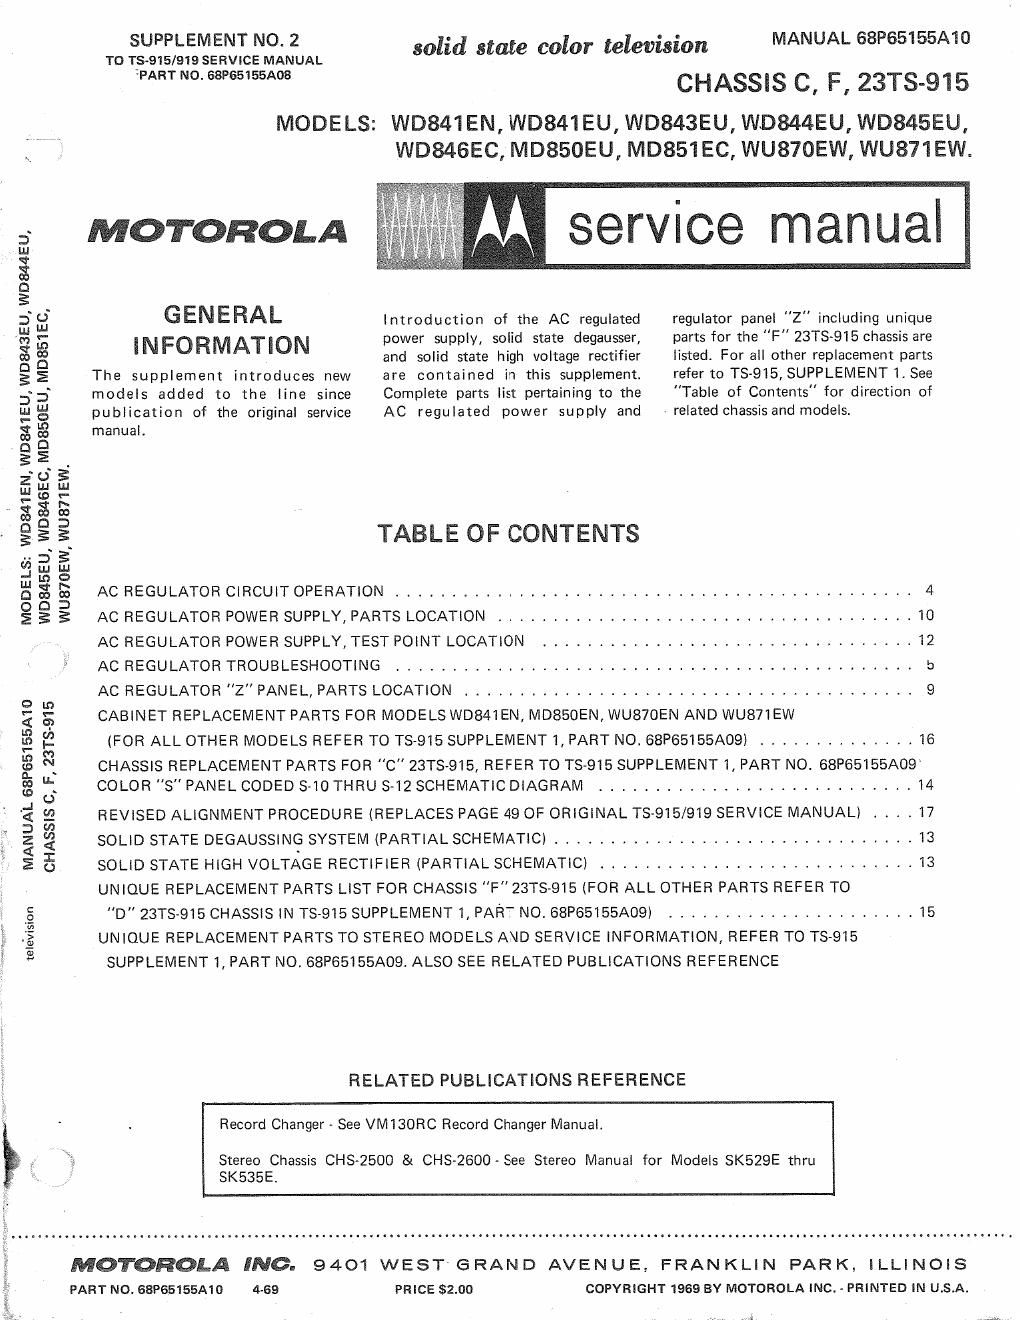 motorola wd 846 eu service manual